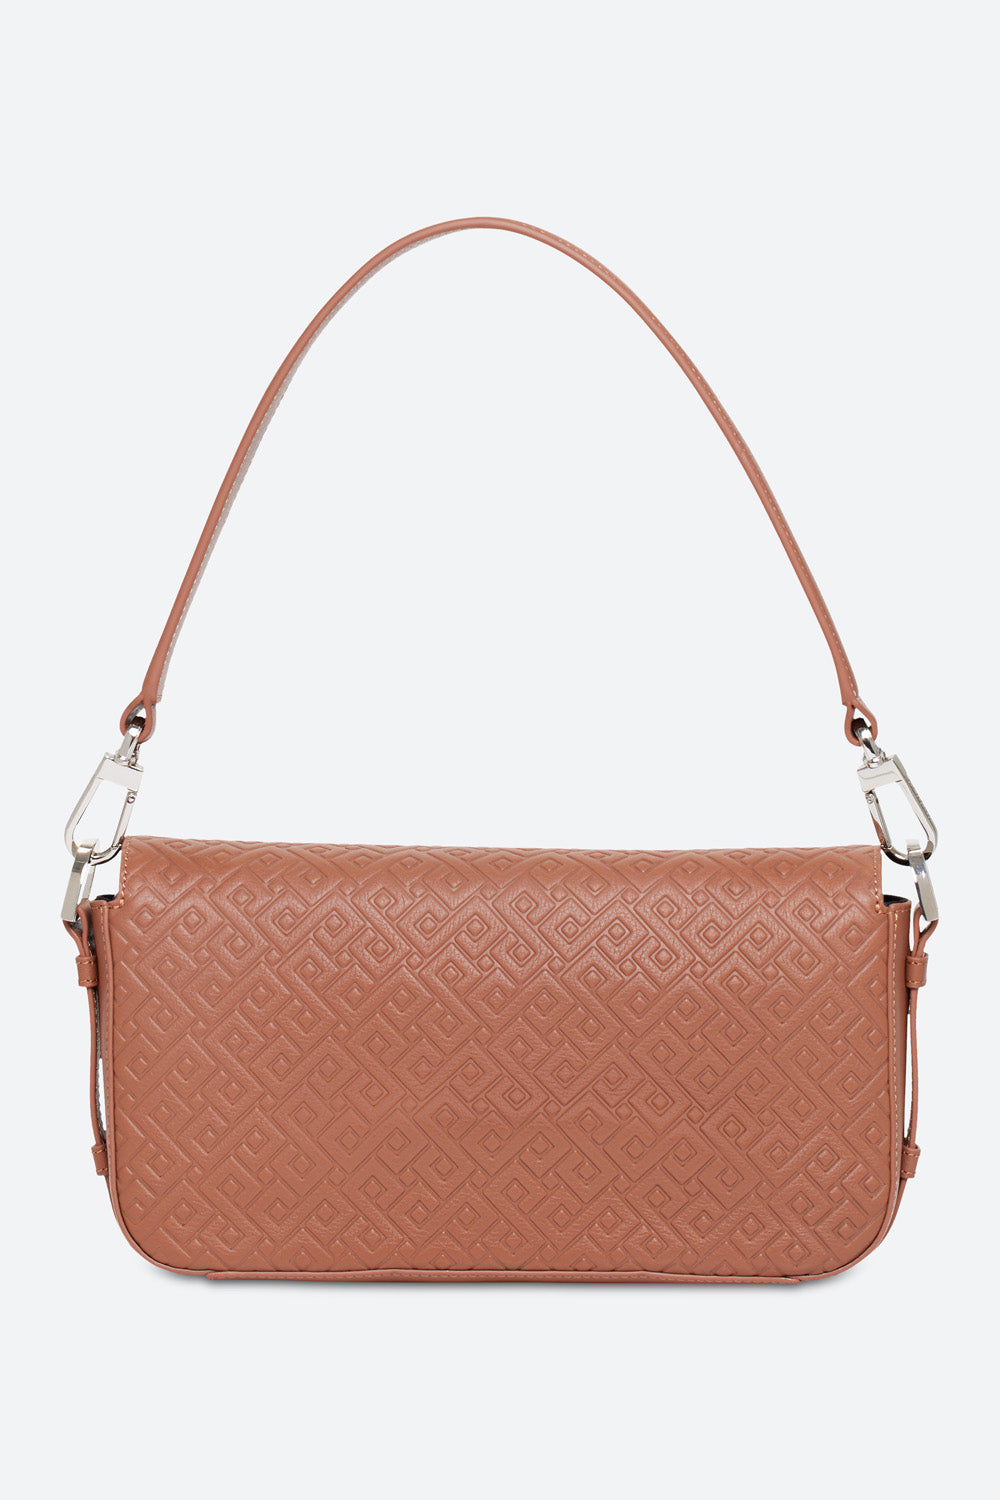 Malvina Baguette Handbag in Cognac, with Polished Chrome Hardware